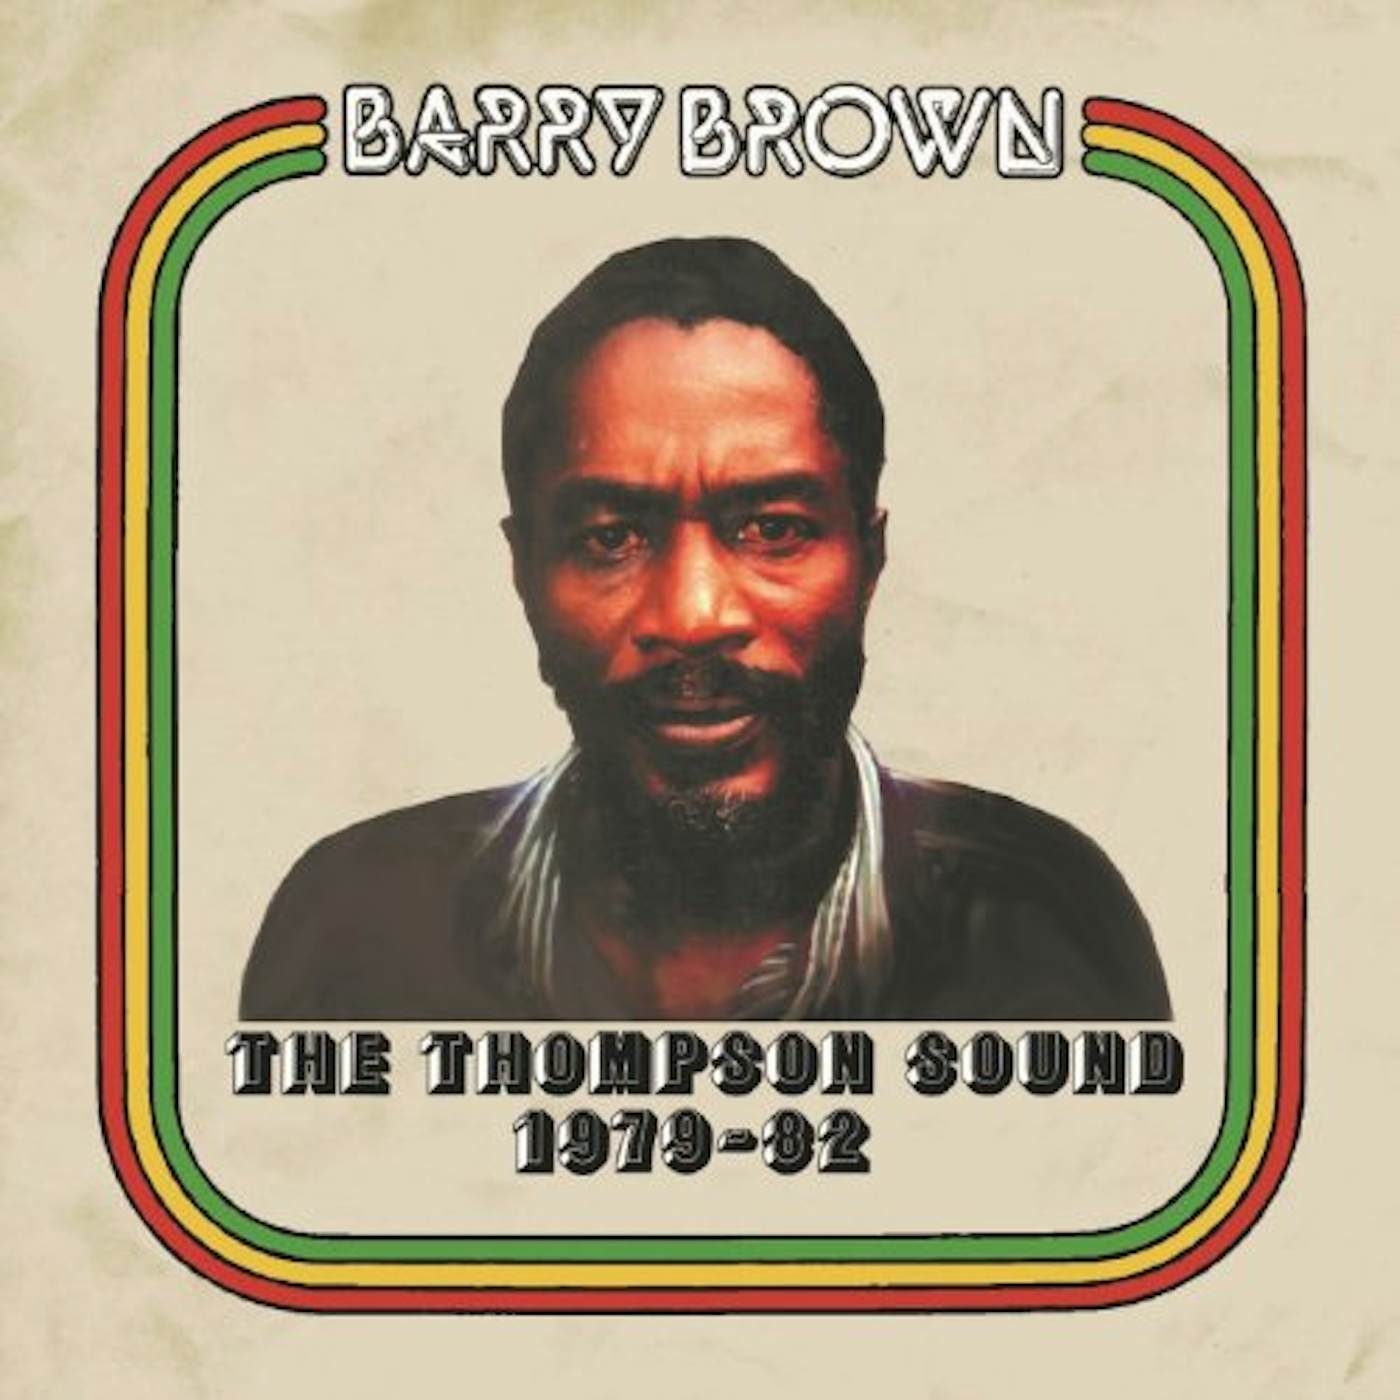 Barry Brown THOMPSON SOUND: 1979-82 CD